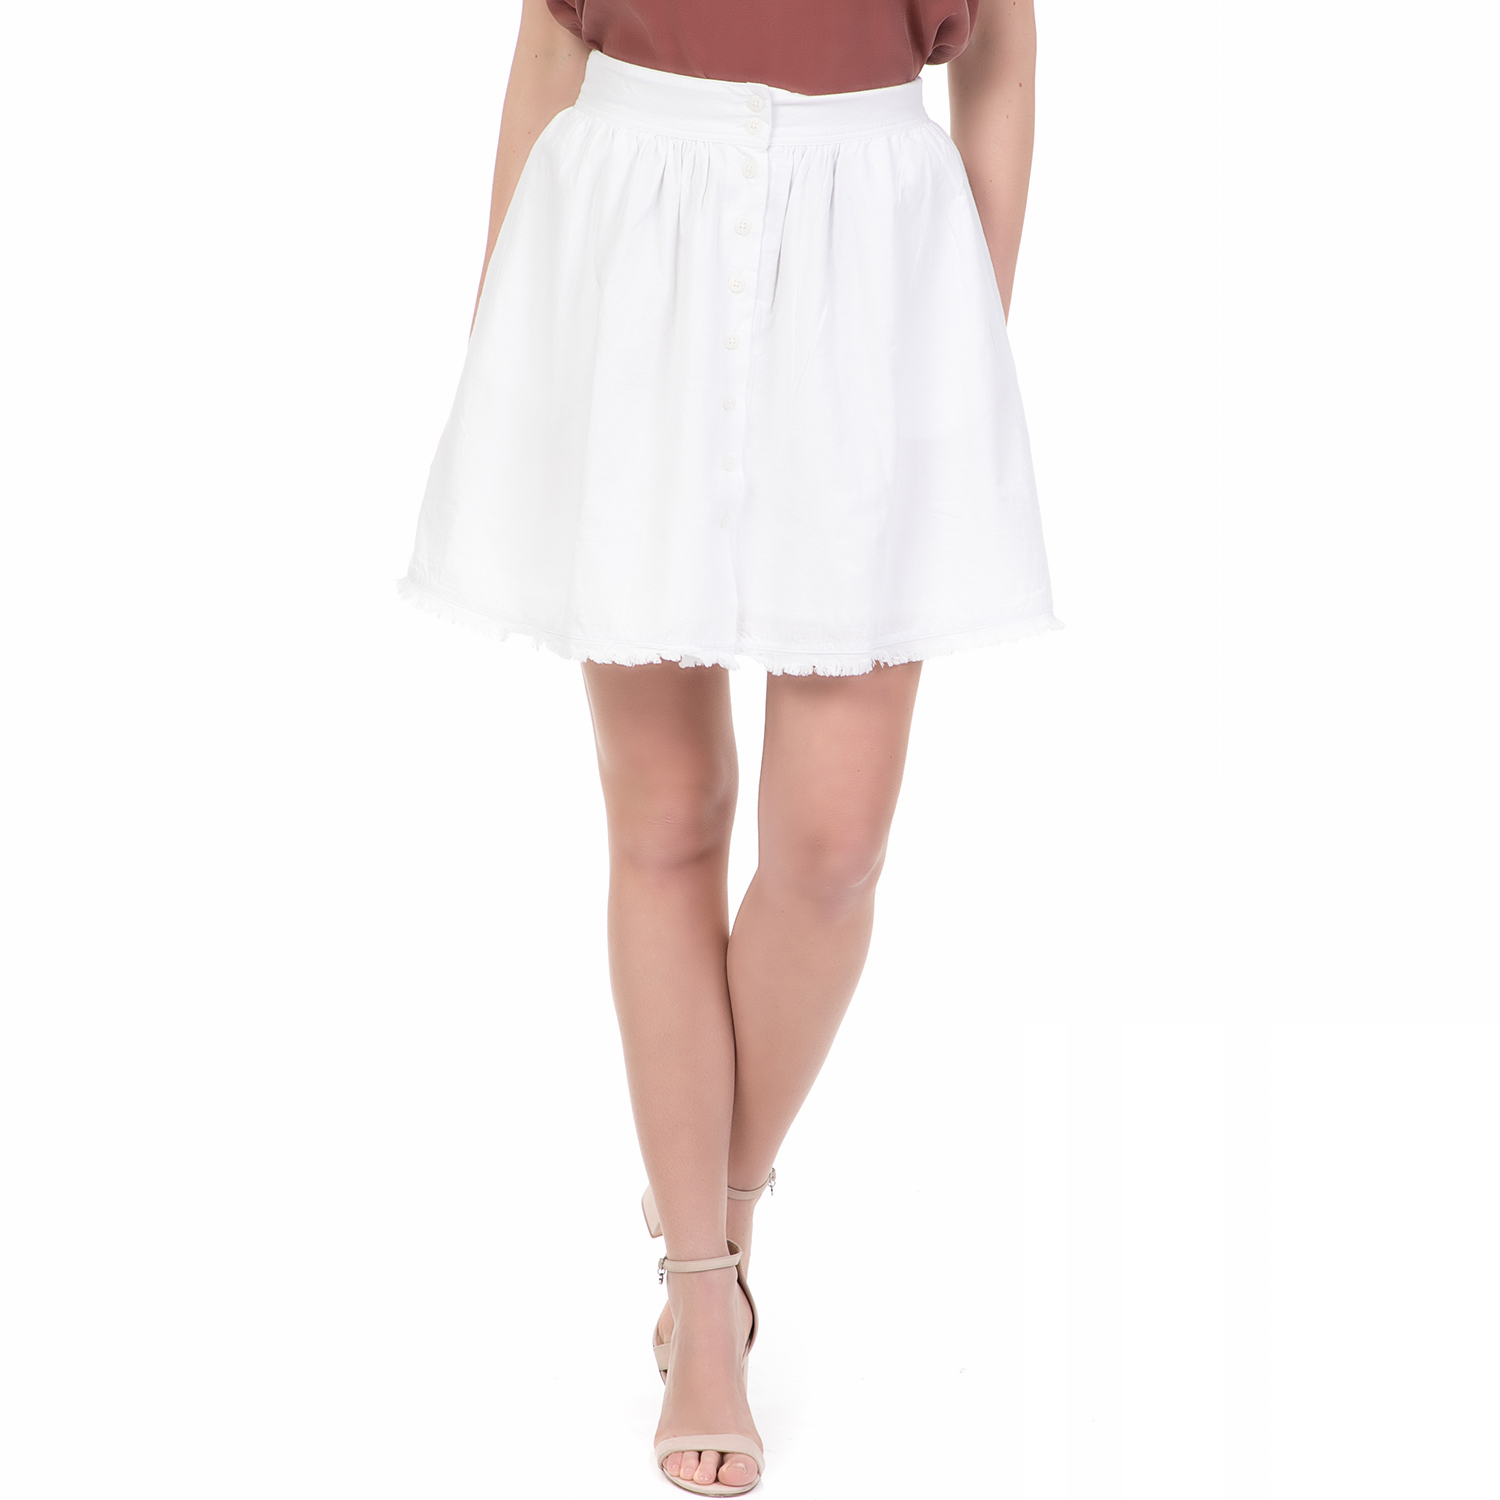 AMERICAN VINTAGE - Γυναικεία μίνι φούστα PIZ107E18 AMERICAN VINTAGE λευκή Γυναικεία/Ρούχα/Φούστες/Μίνι